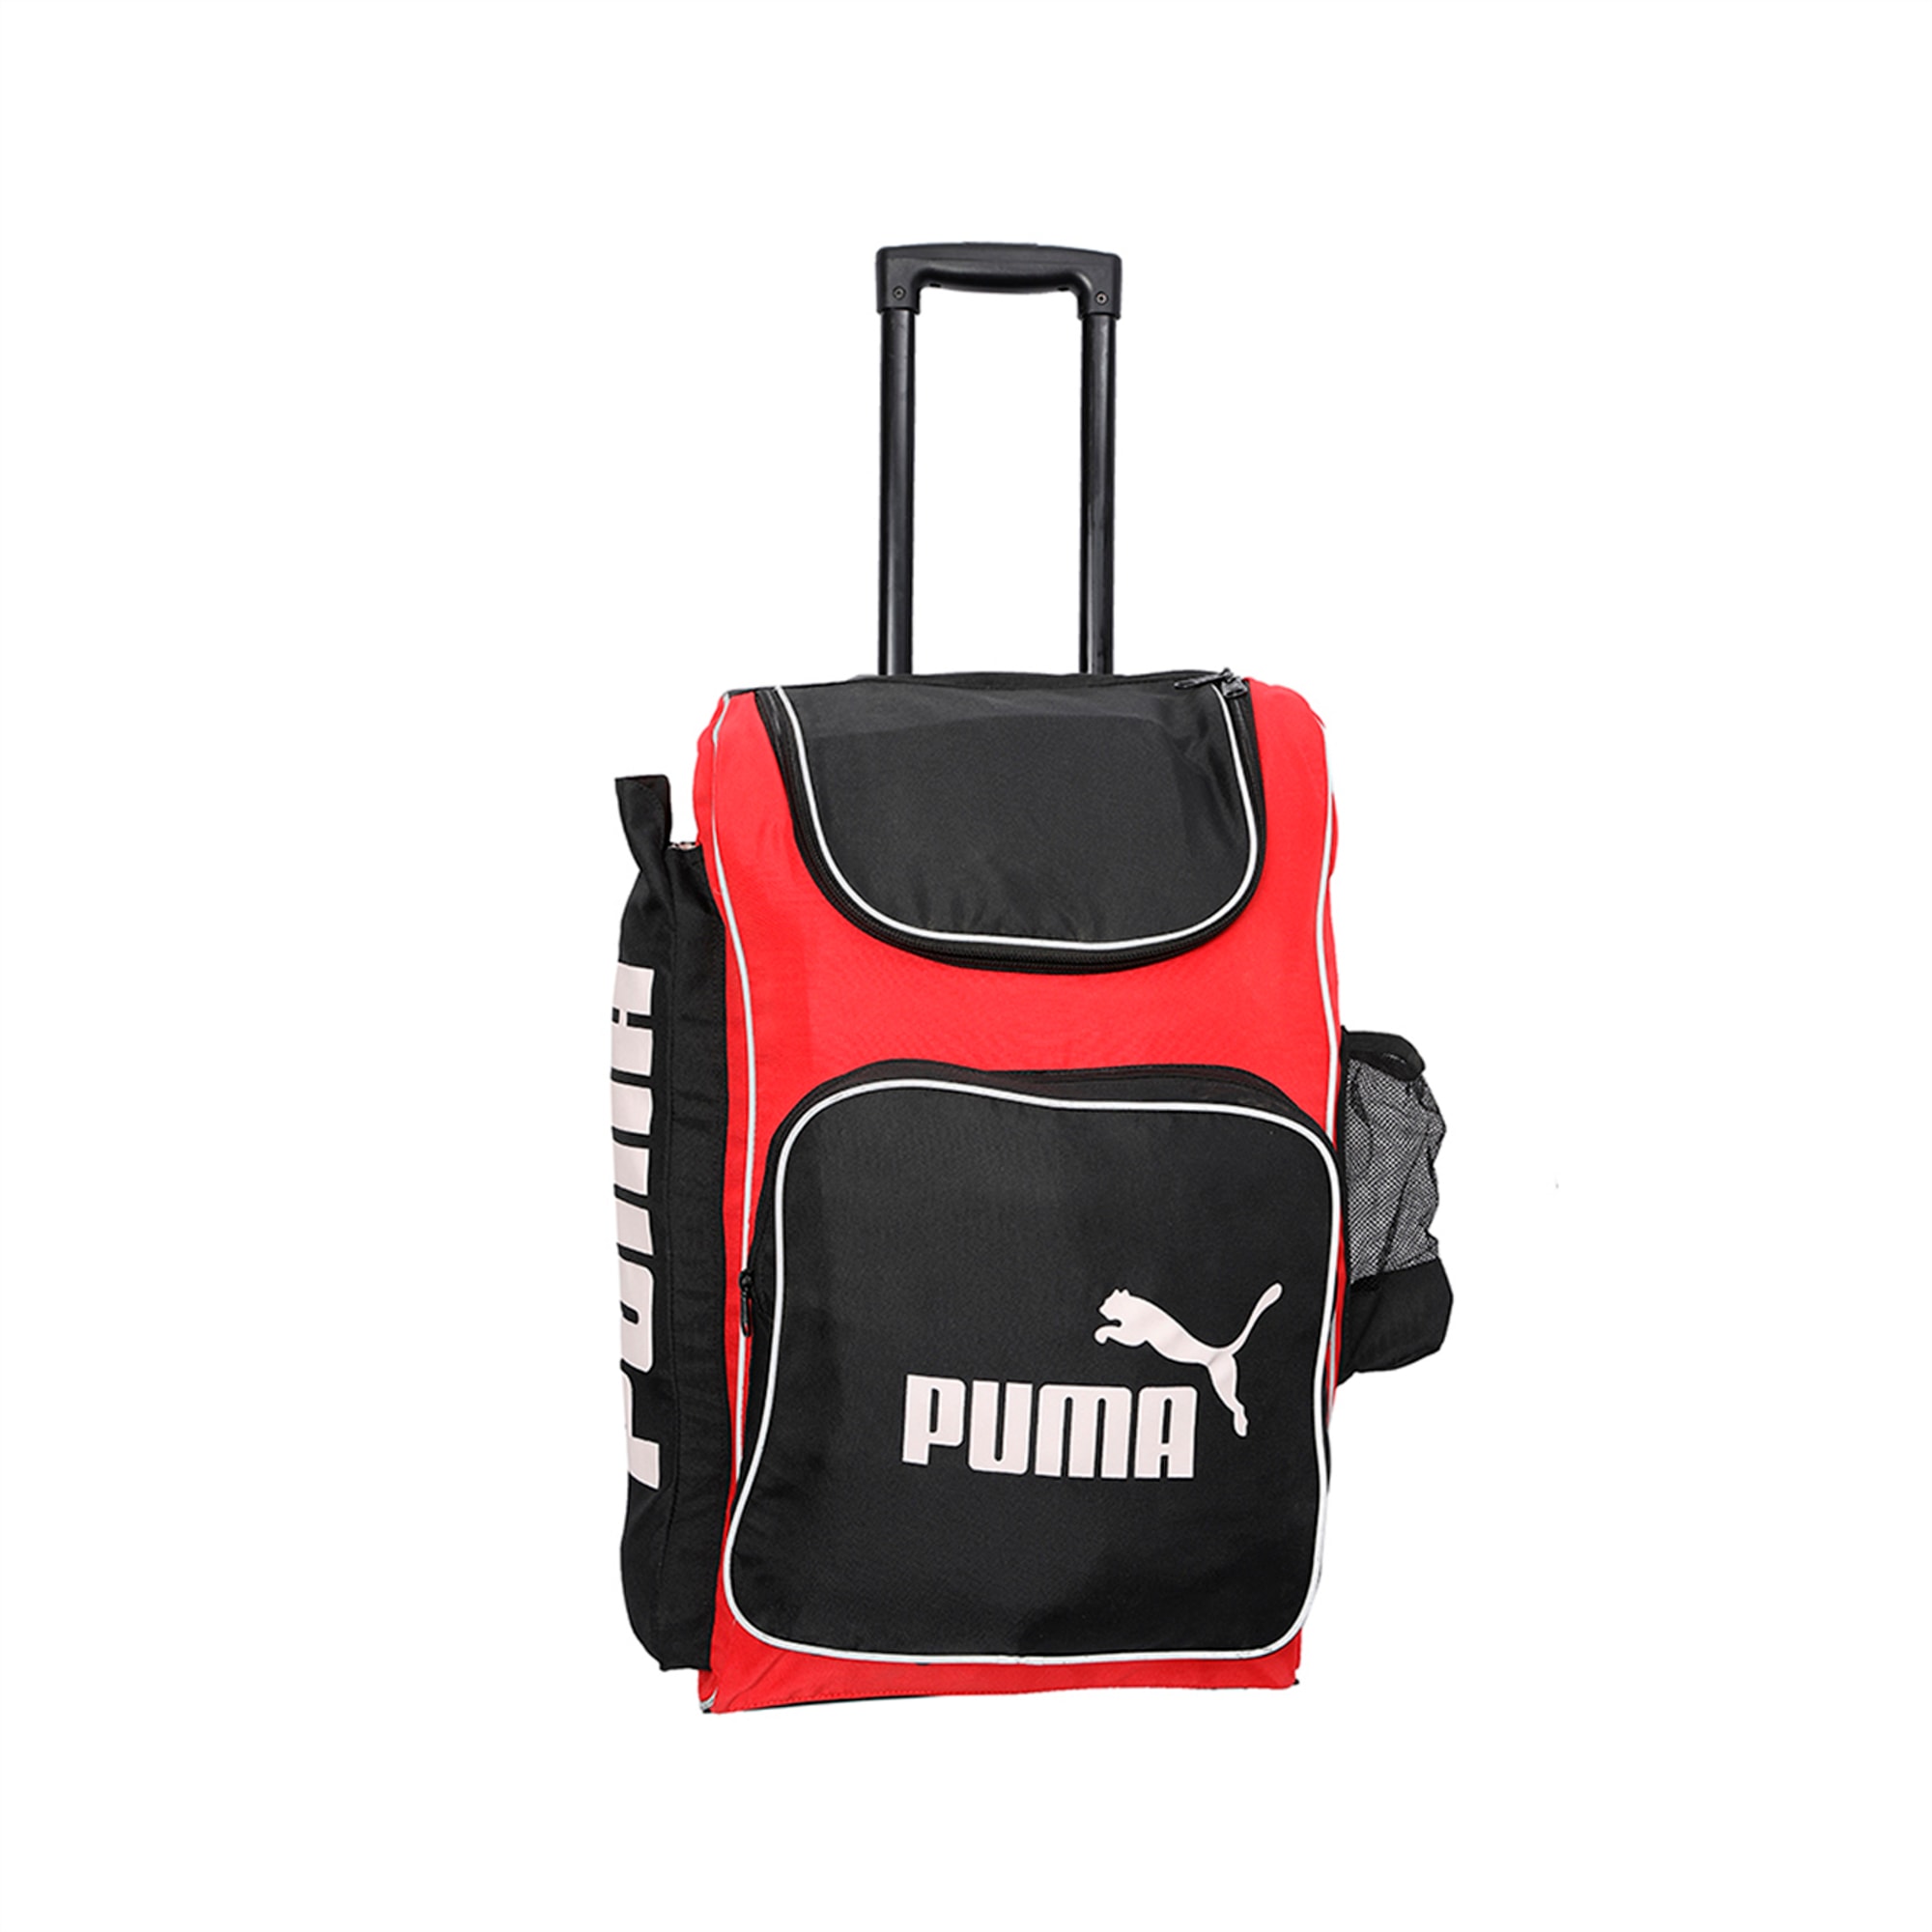 puma evospeed cricket bag